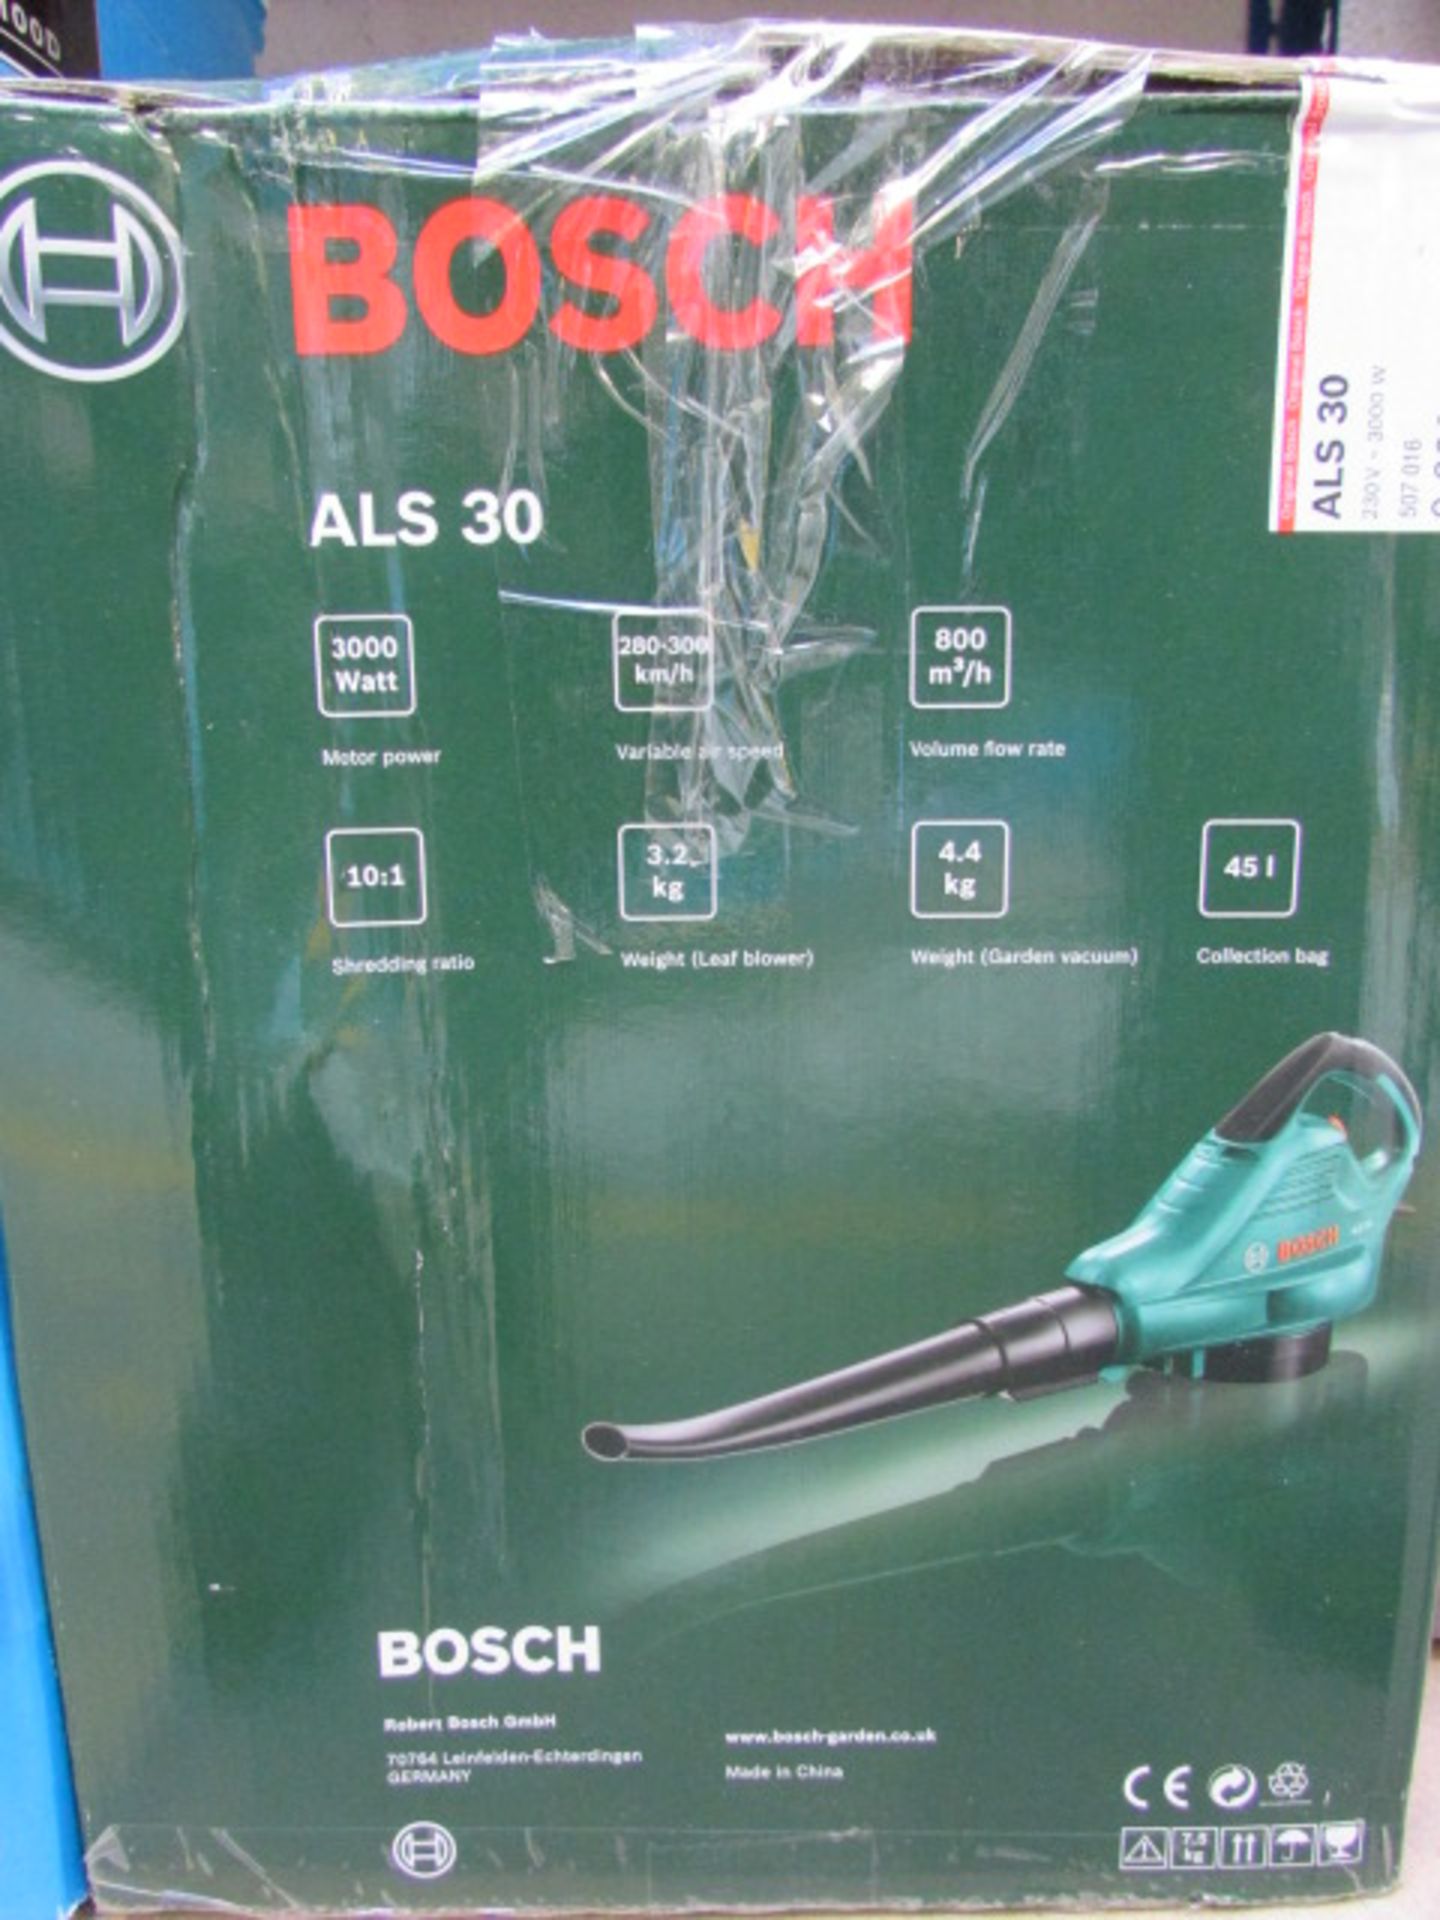 Bosch Als 30 Electric Garden Blower & Vacuum